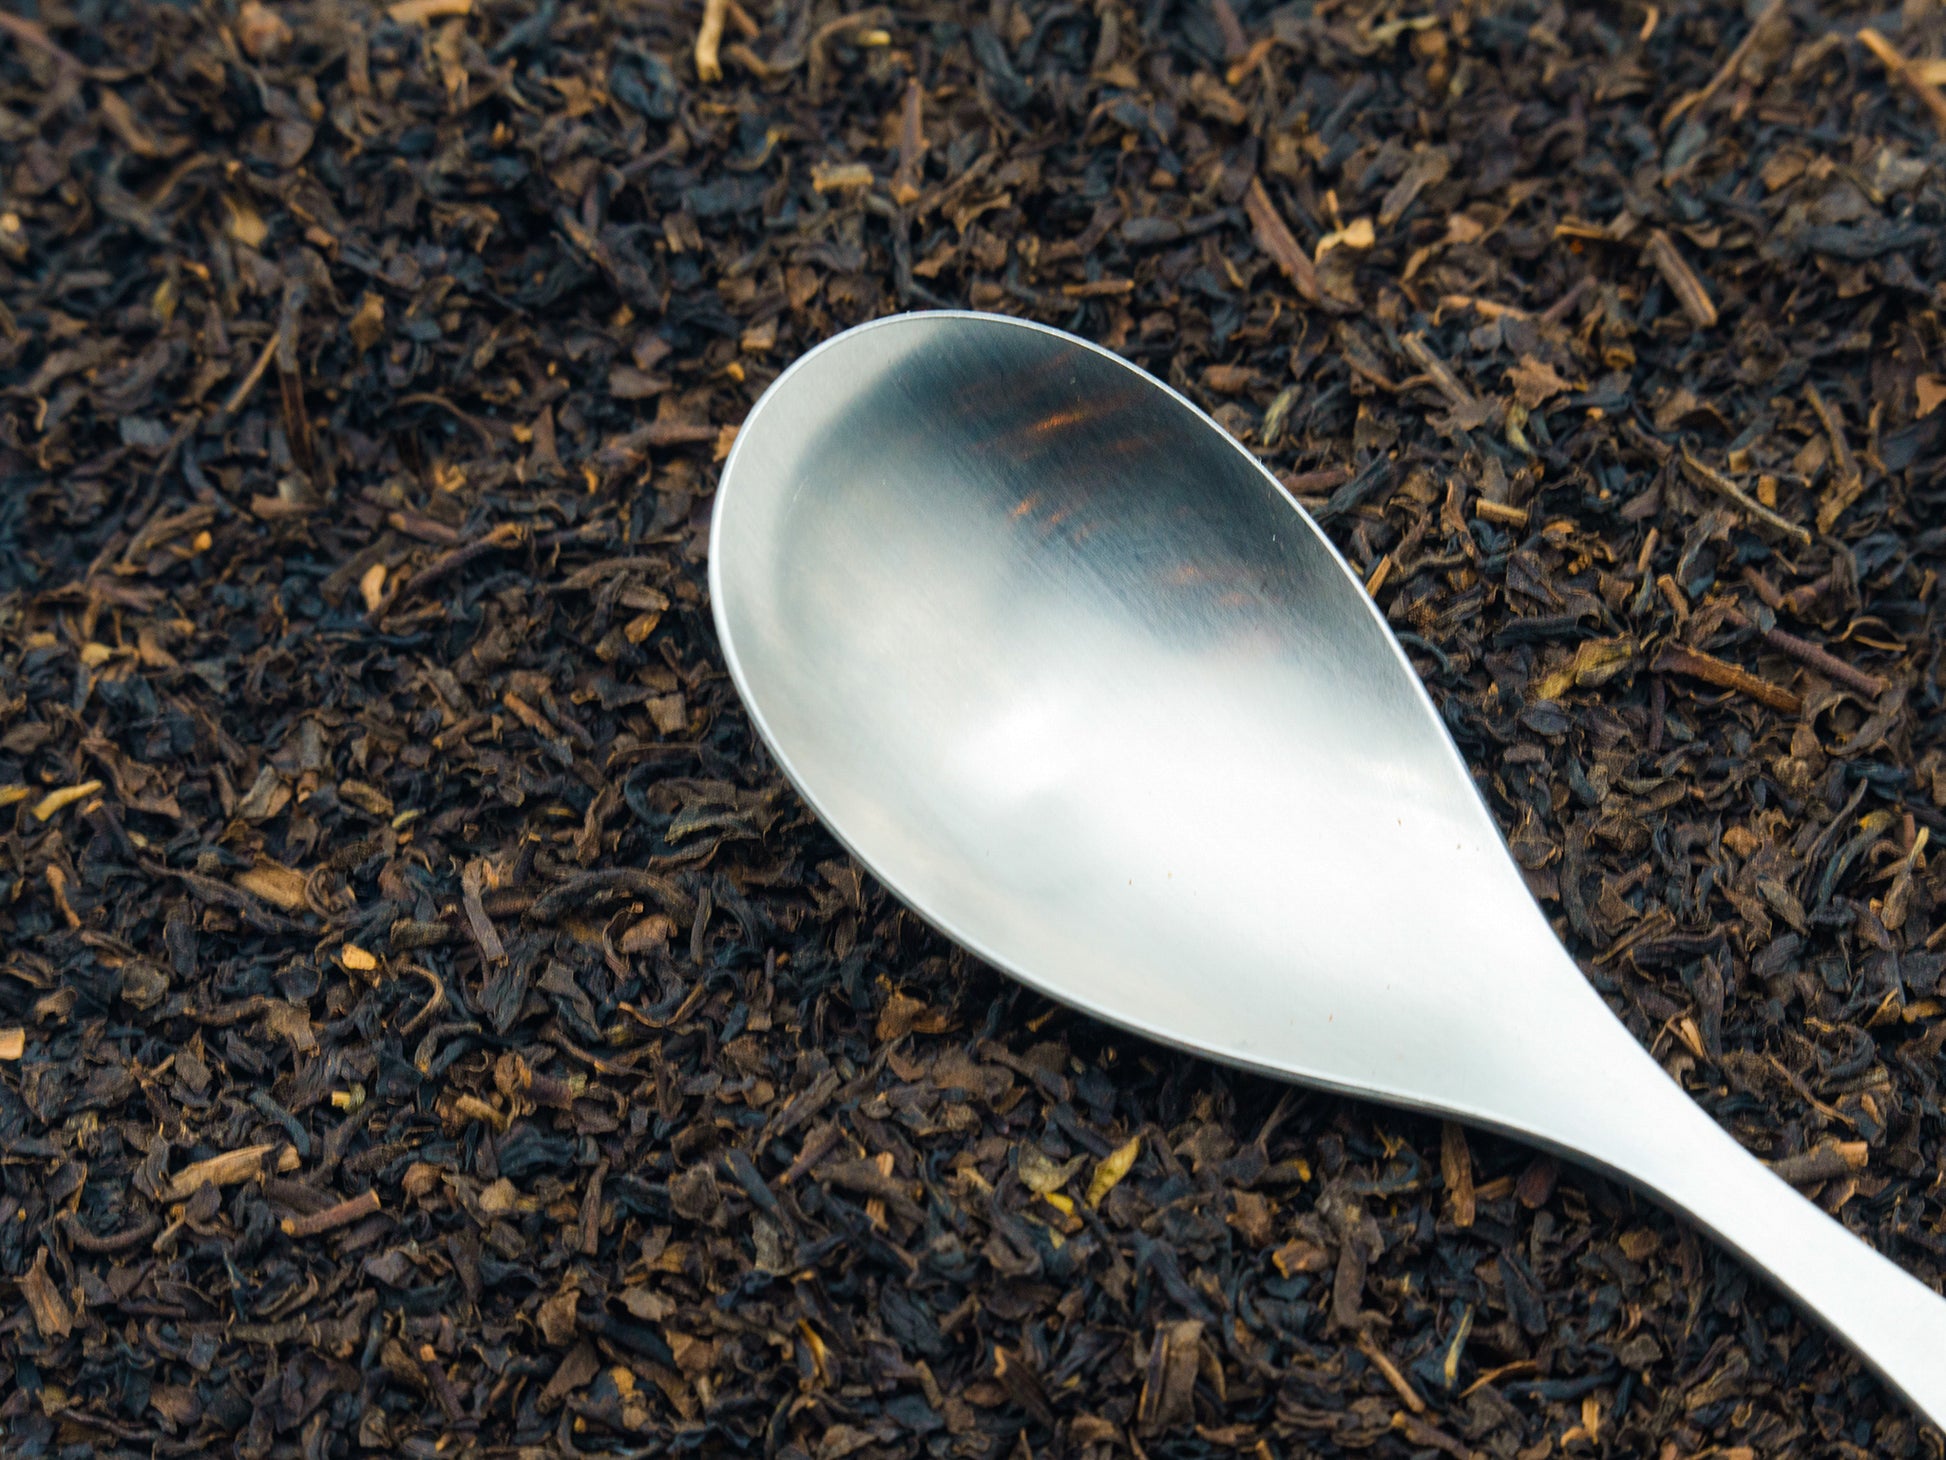 TEA23 Sri Lankan loose black tea with a spoon resting on top